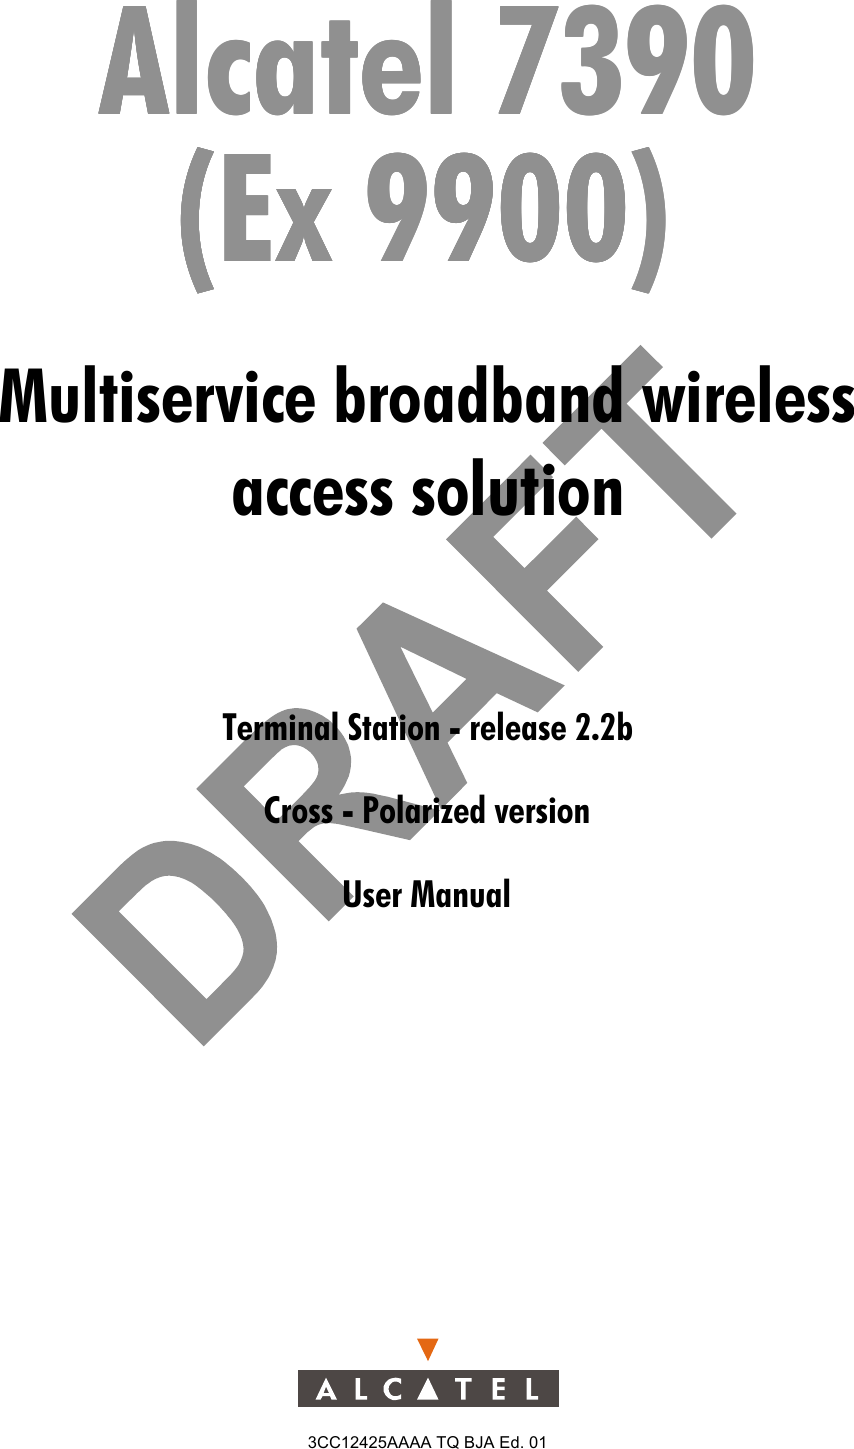 3CC12425AAAA TQ BJA Ed. 01Alcatel 7390Alcatel 7390Alcatel 7390Alcatel 7390Multiservice broadband wireless access solutionTerminal Station - release 2.2b(Ex 9900)(Ex 9900)(Ex 9900)(Ex 9900)Cross - Polarized versionUser Manual